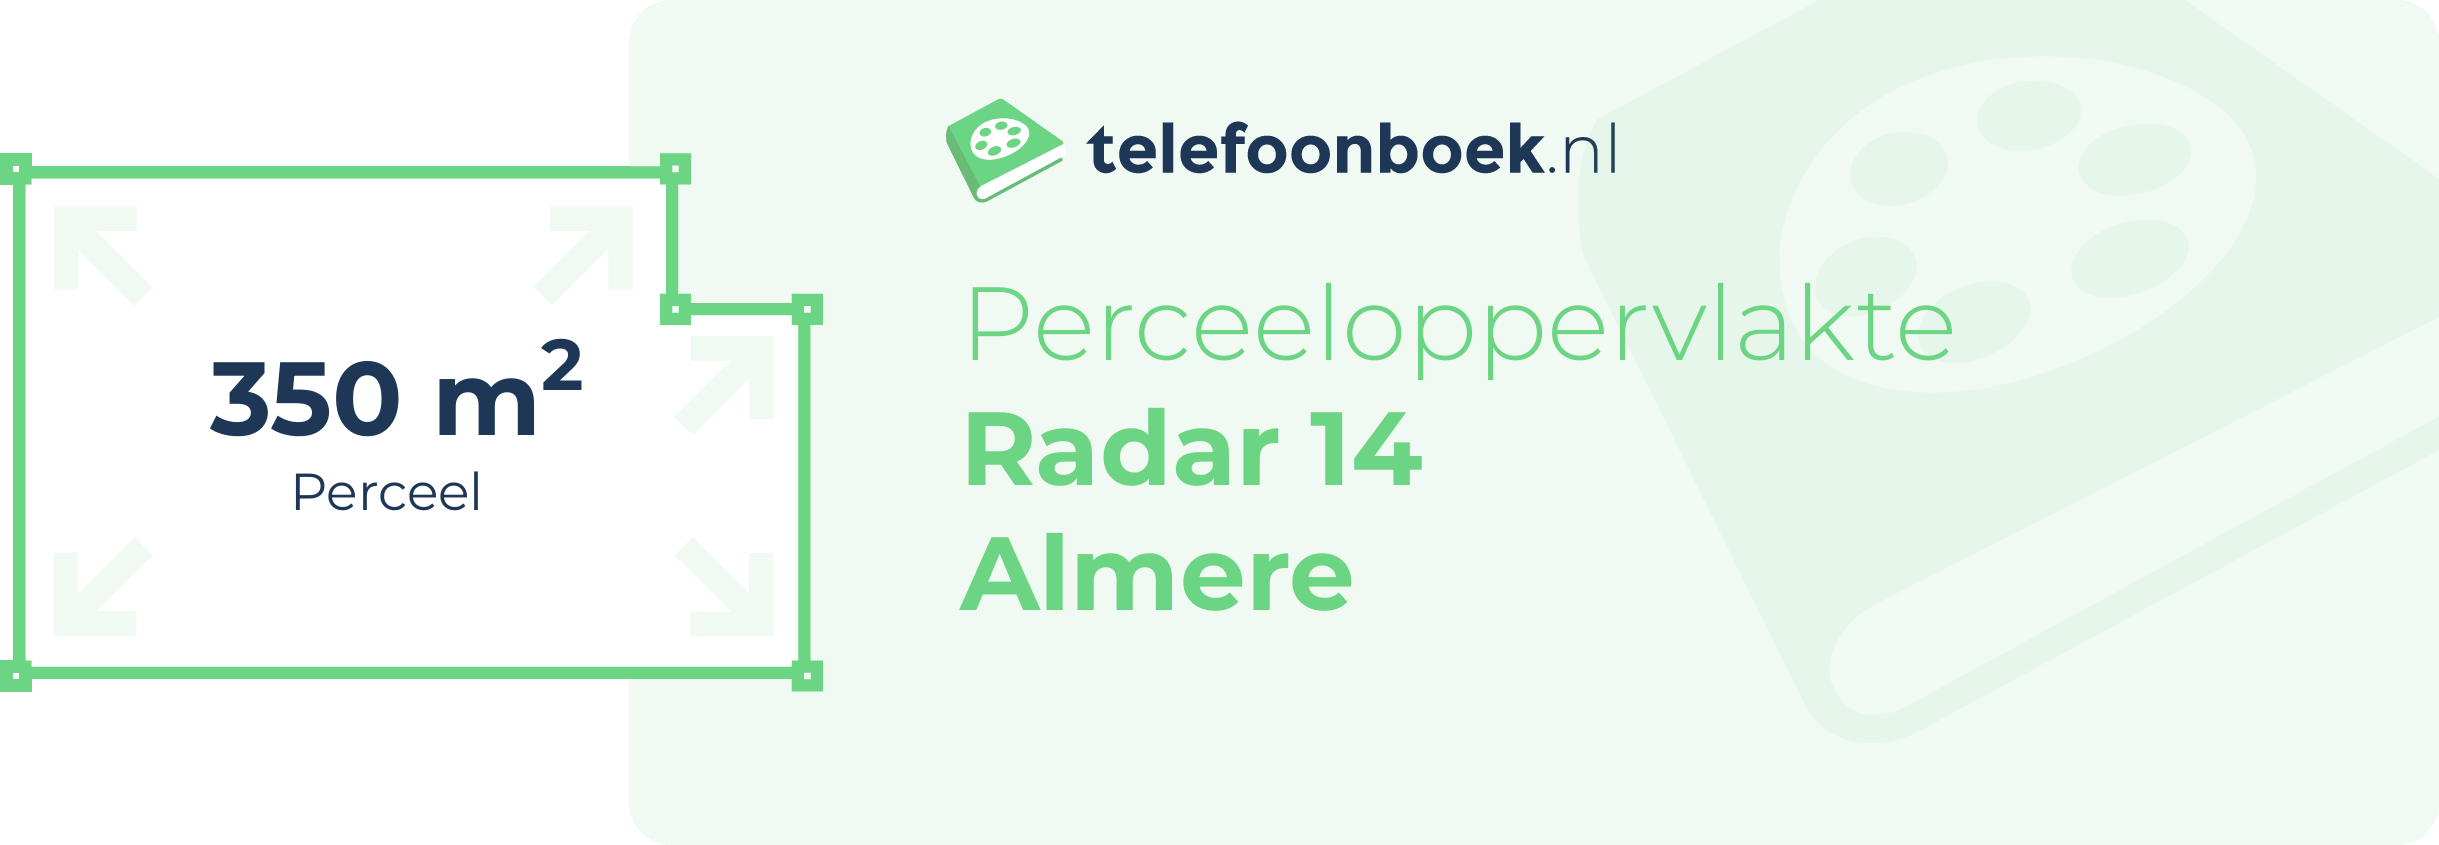 Perceeloppervlakte Radar 14 Almere